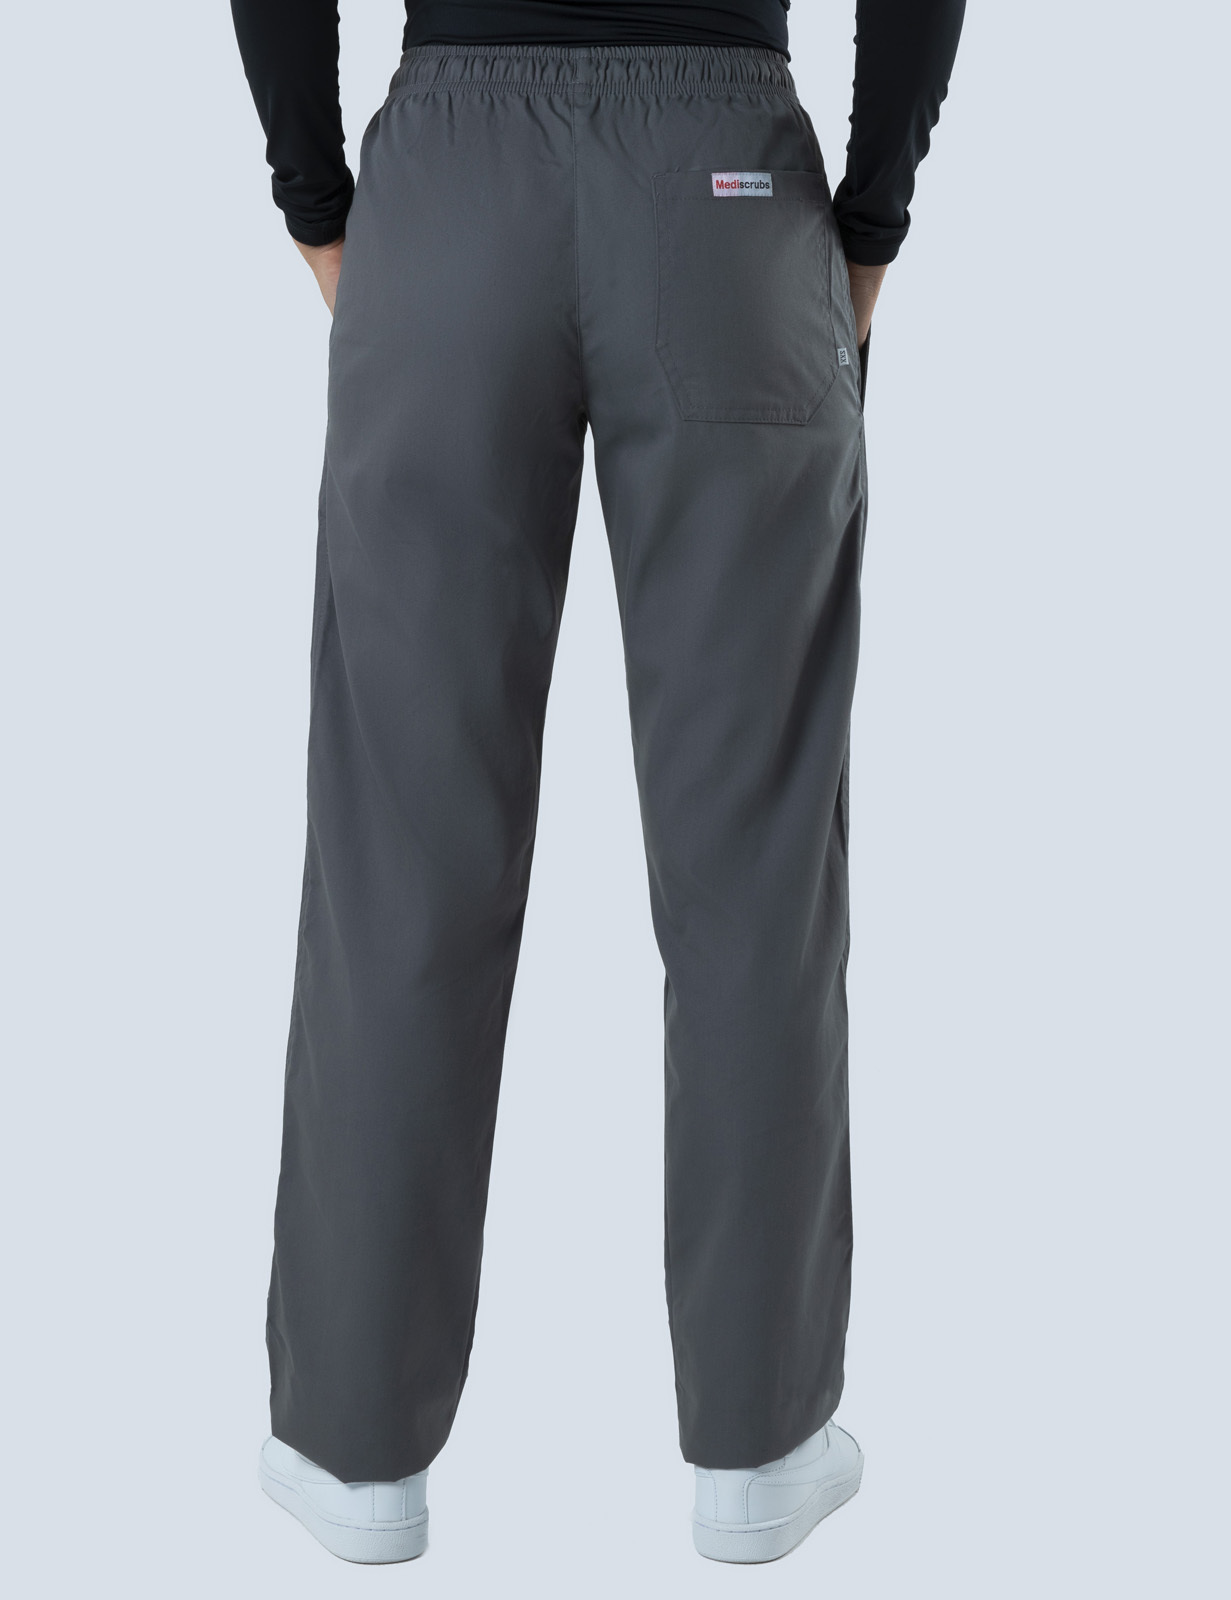 Women's Regular Cut Pants - Steel Grey - 5x Large